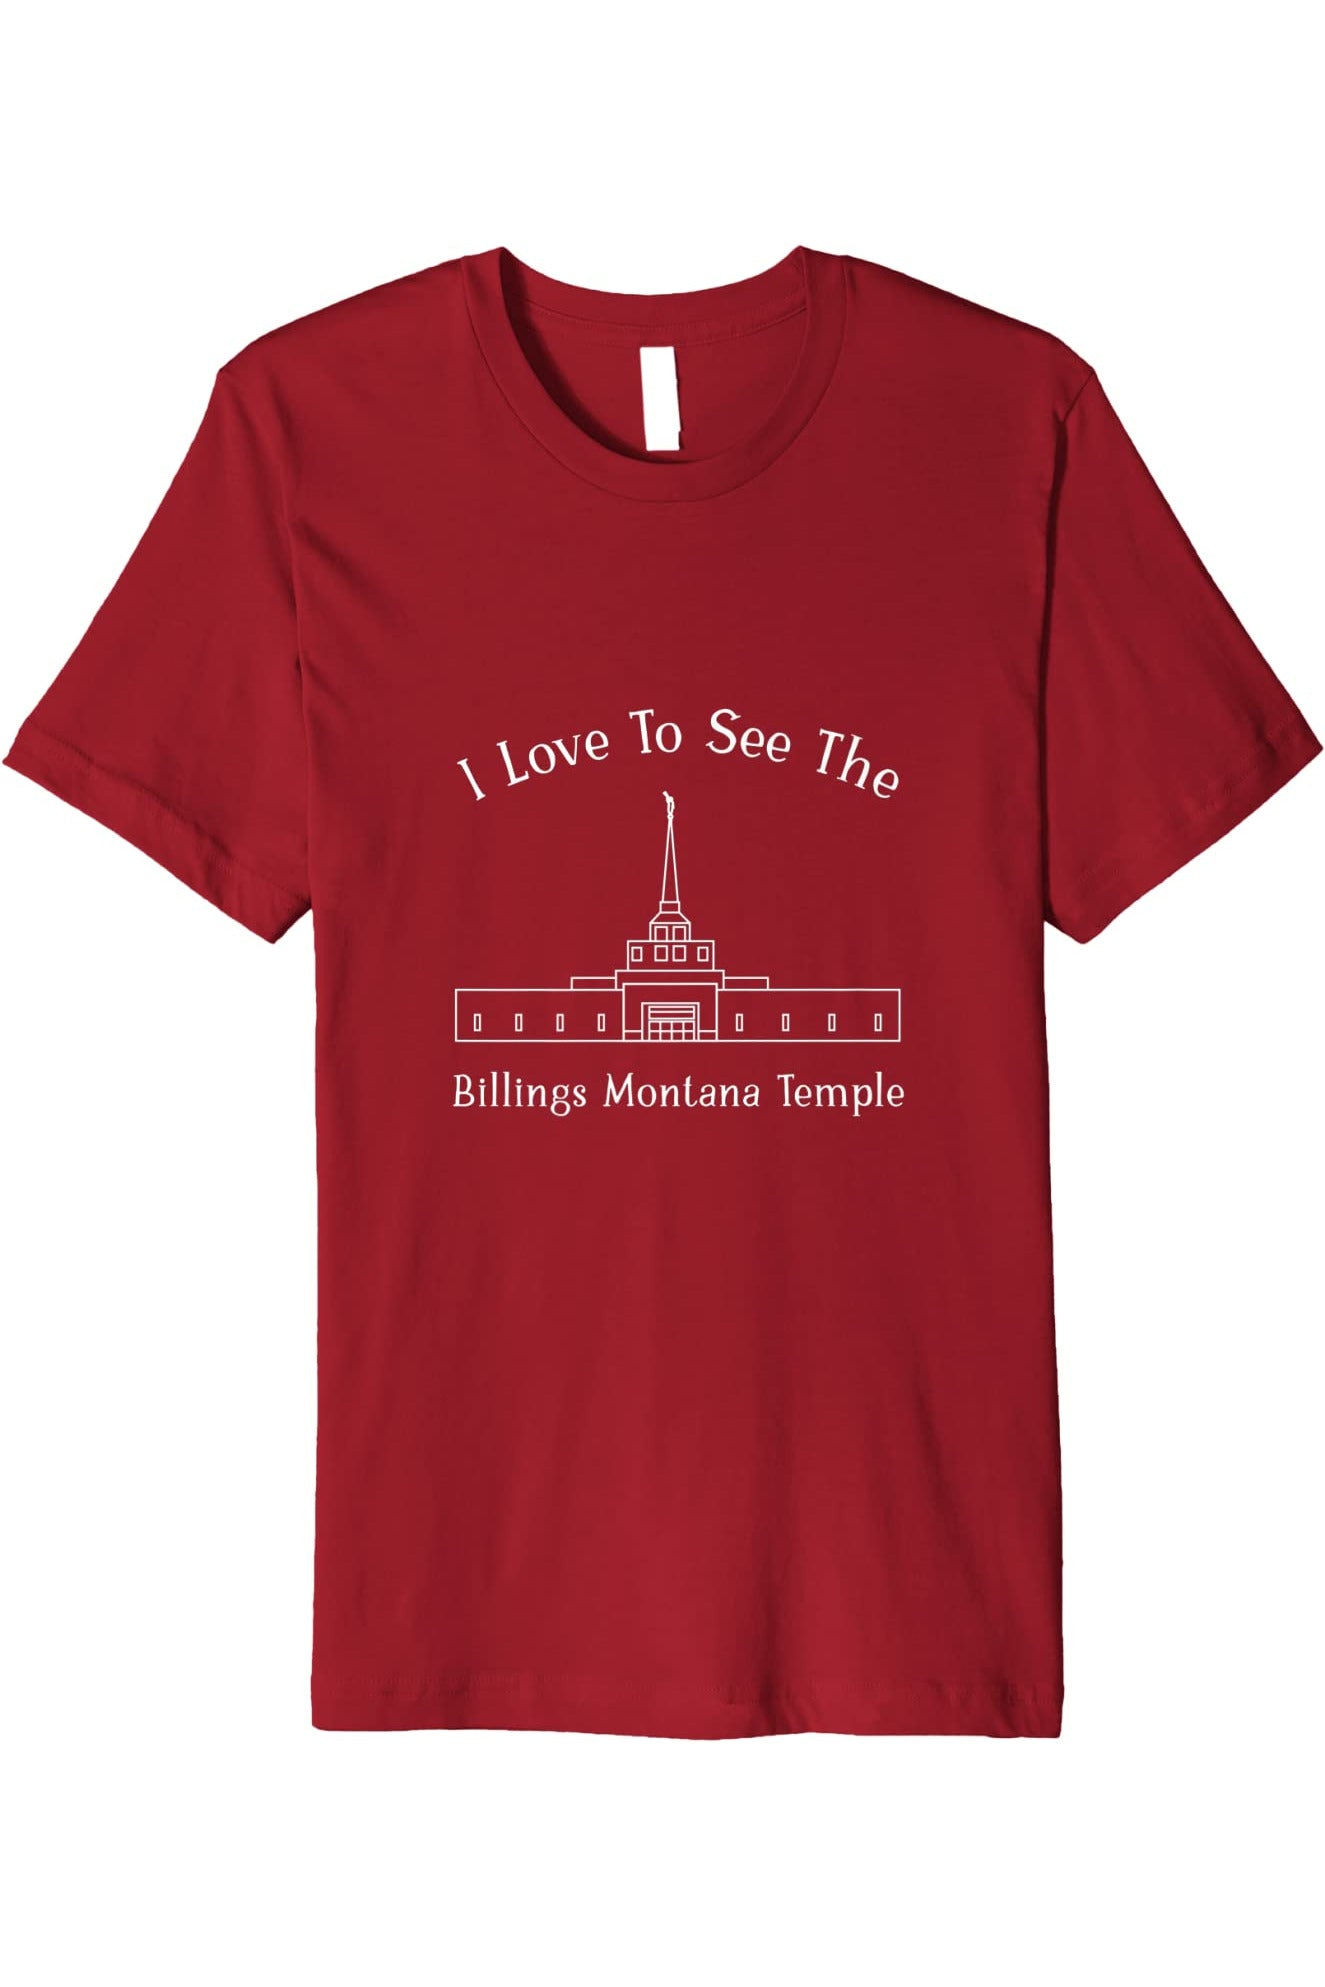 Billings Montana Temple T-Shirt - Premium -  Style (English) US